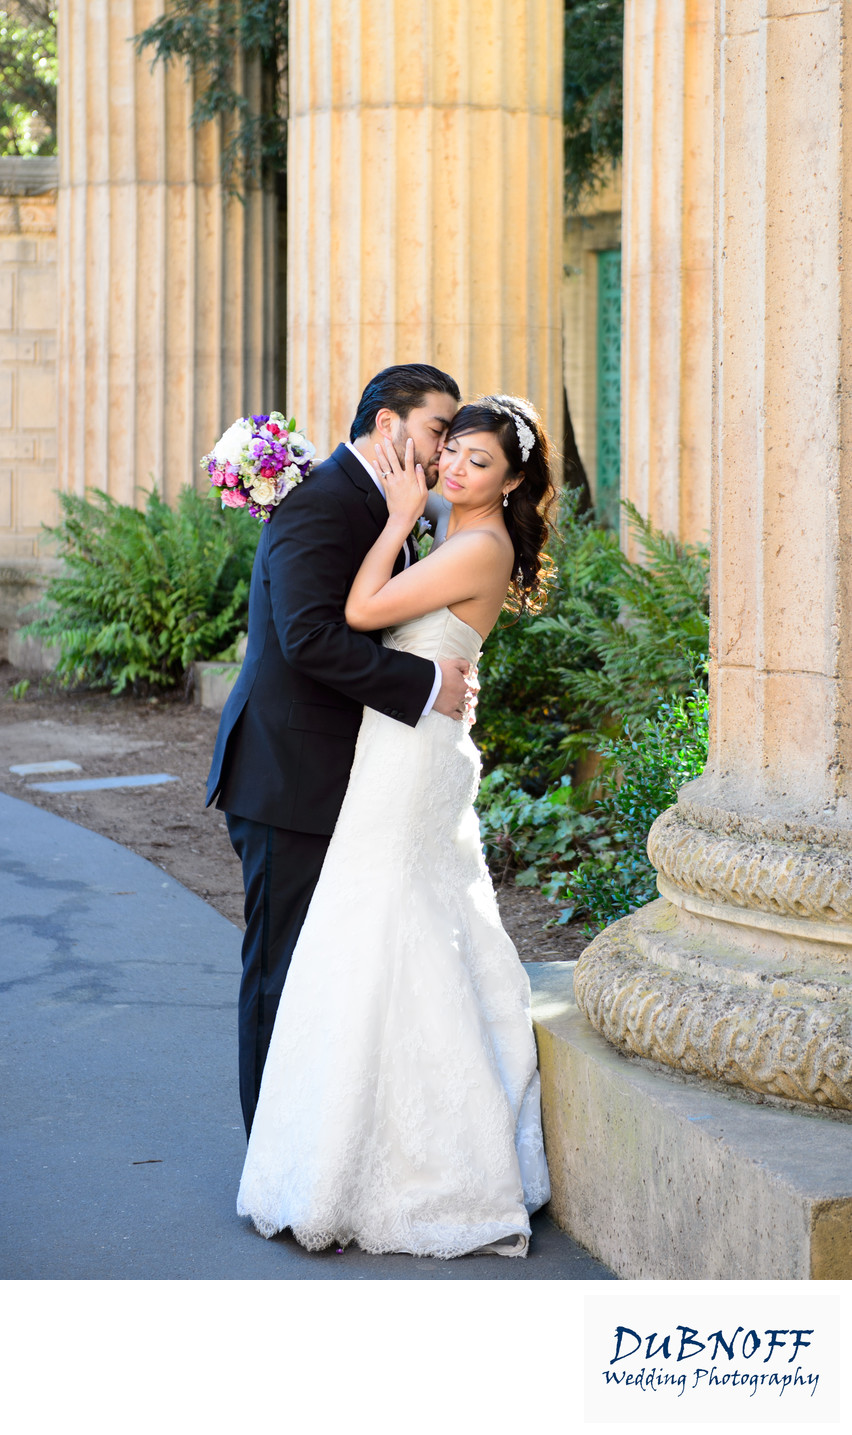 Romance at Palace of Fine Arts in San Francisco - City Hall Wedding